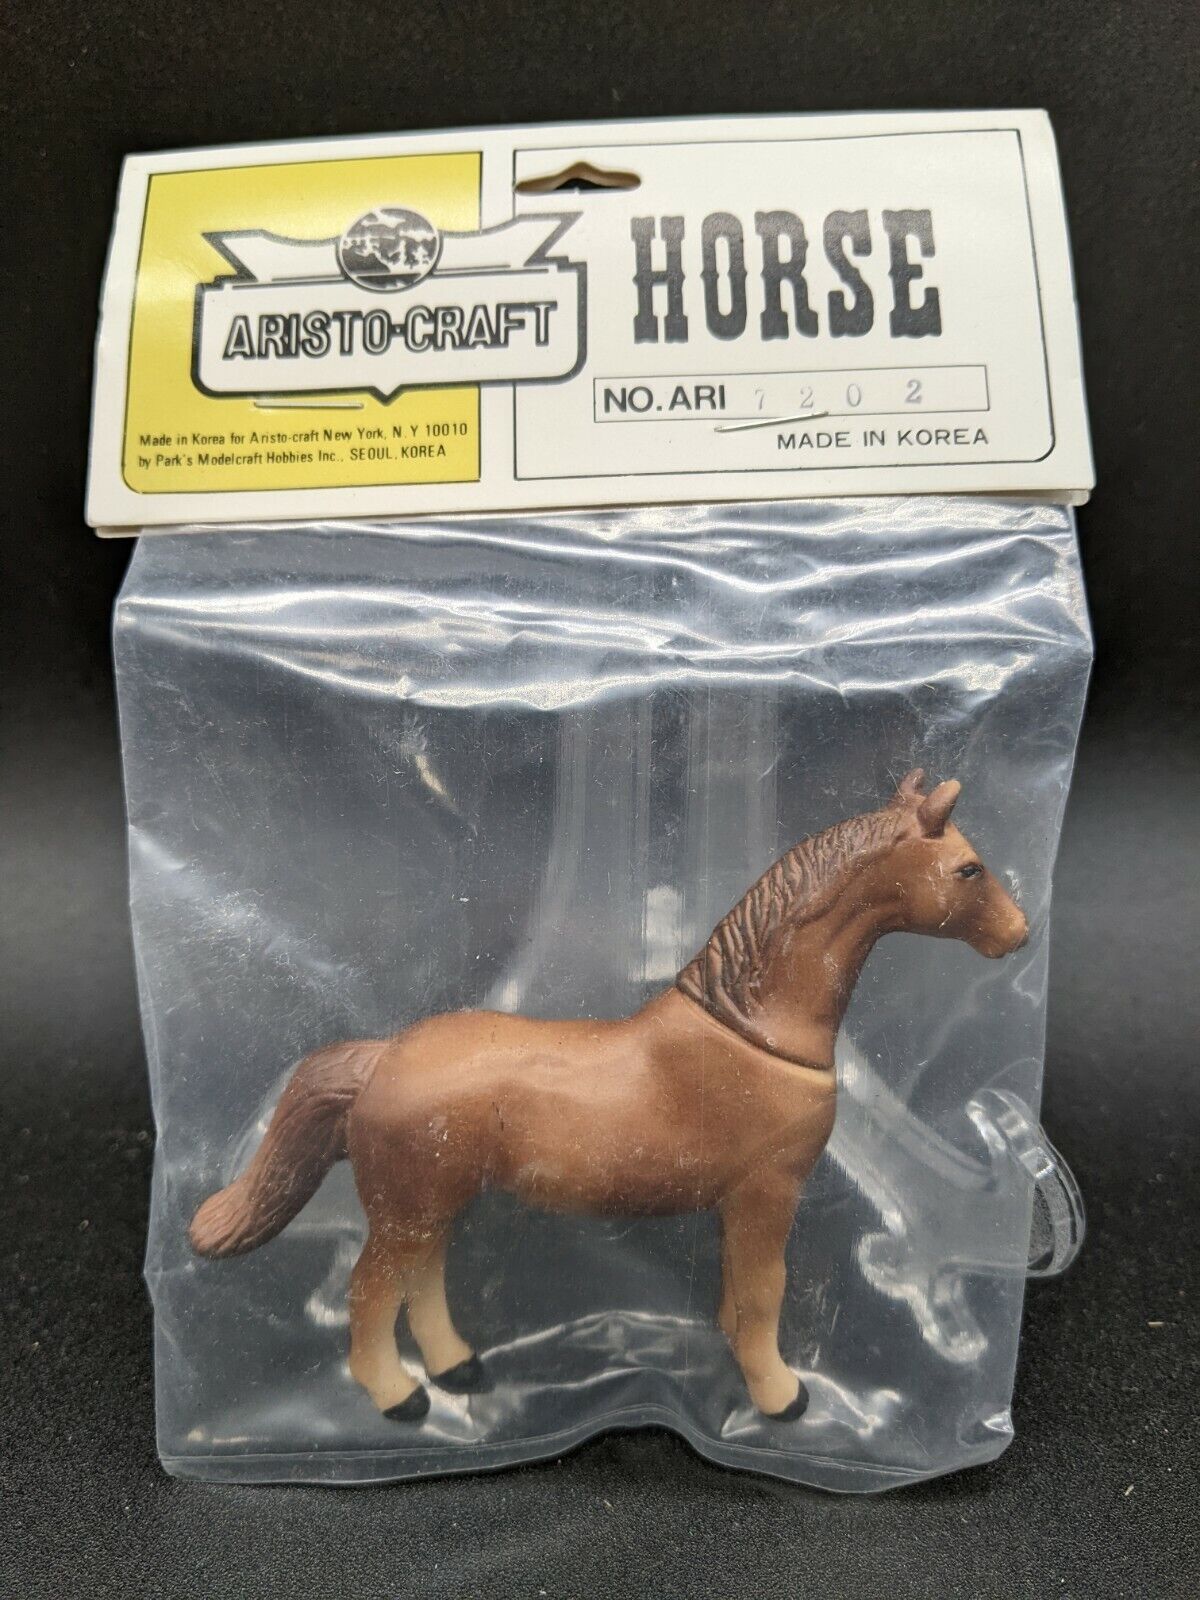 Aristo-Craft Ari 7202 G Brown Horse Figure NOS Made in Seoul, Korea